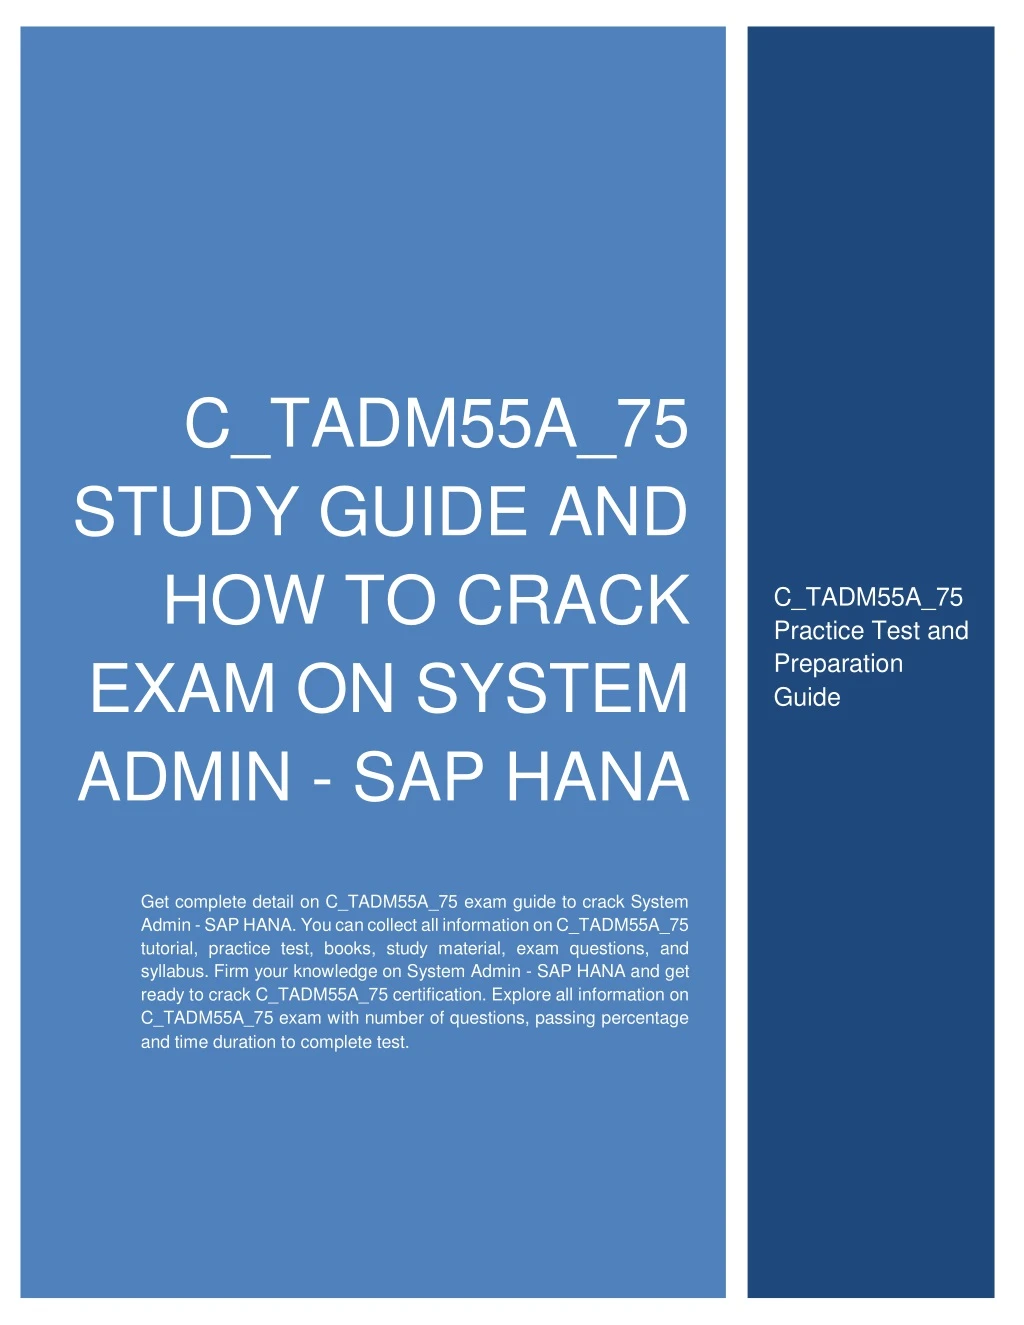 c tadm55a 75 study guide and how to crack exam